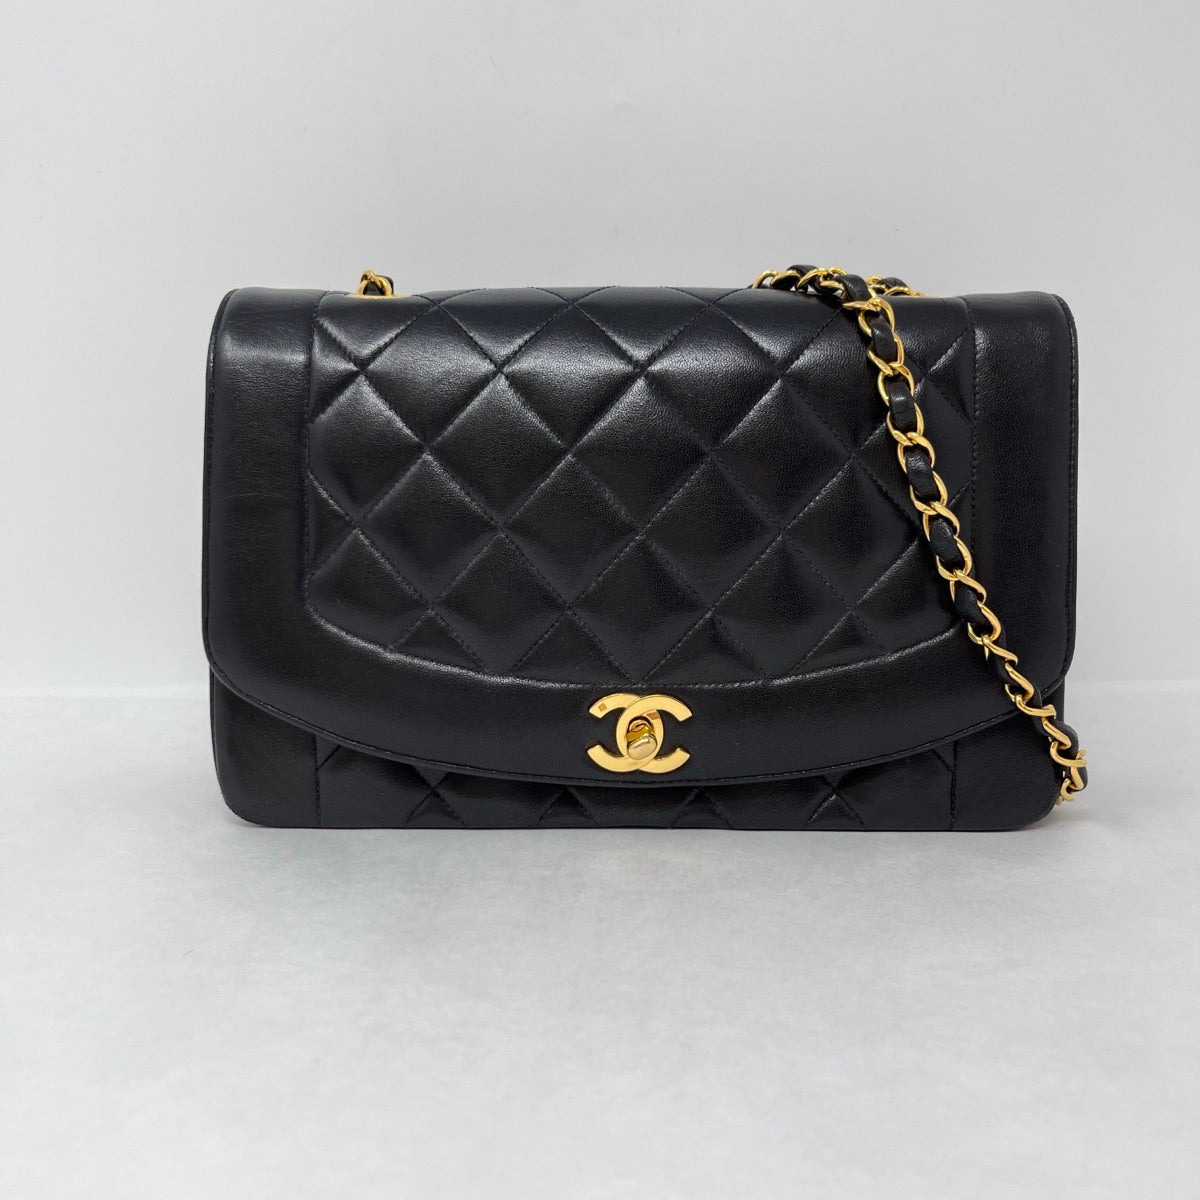 Chanel 1991 -1994 Diana Bag